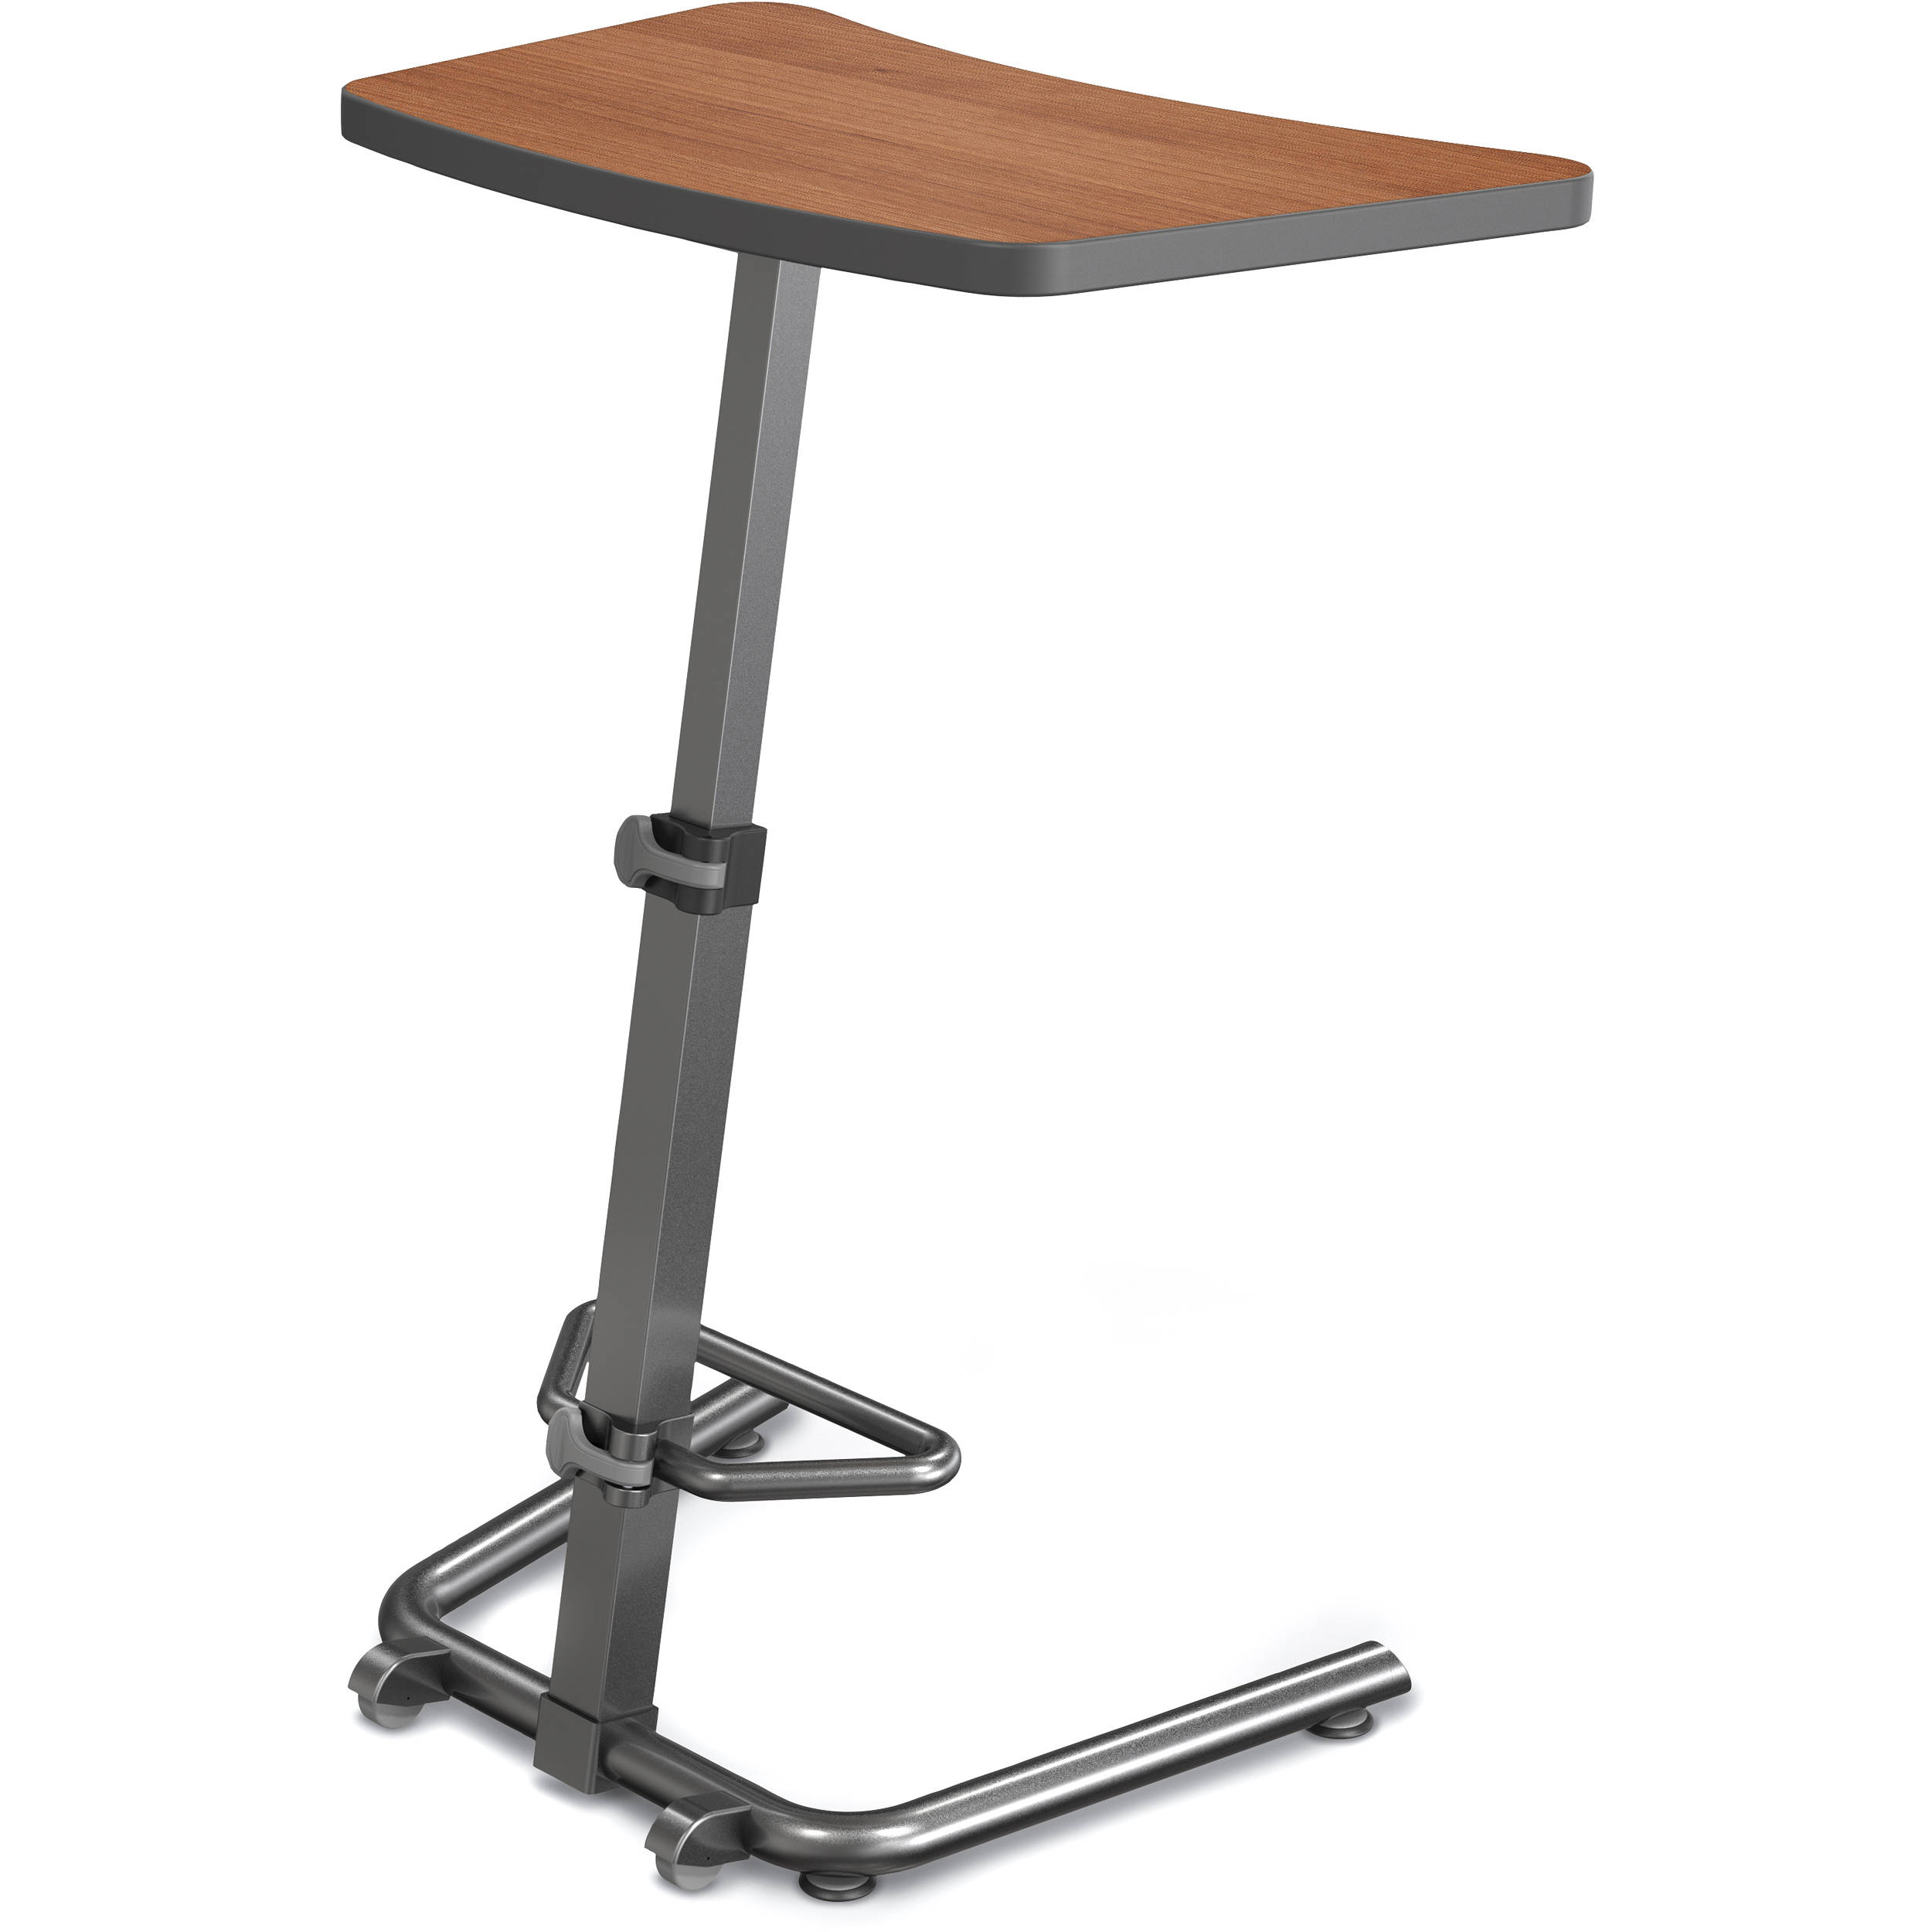 Balt Up Rite Height Adjustable Sit Stand Student 90532 7919 Bk